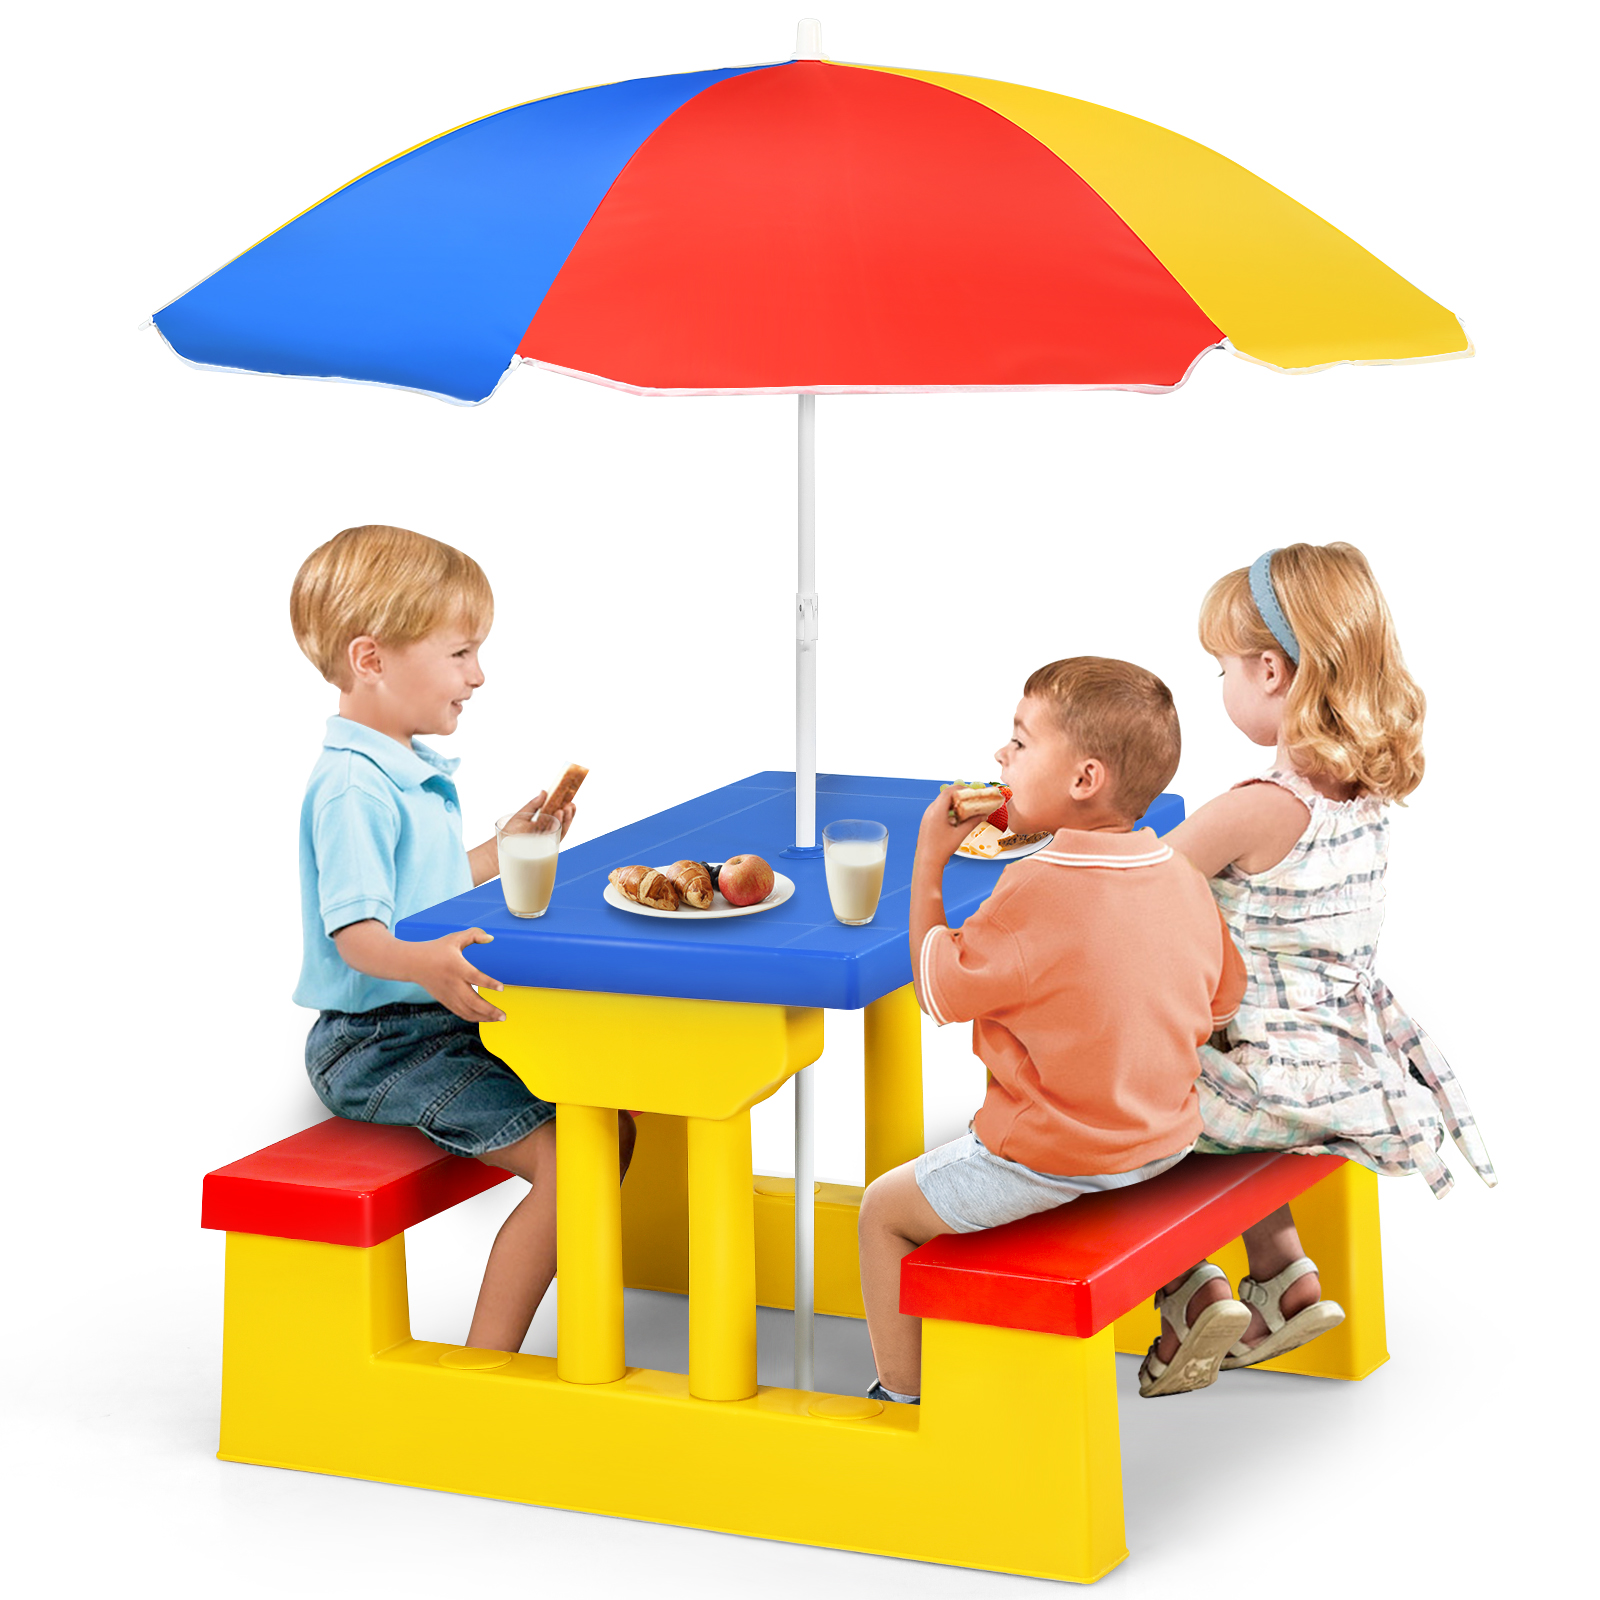 Infans Kids Picnic Table Set W/Removable Umbrella Indoor Outdoor Garden Patio - image 1 of 7